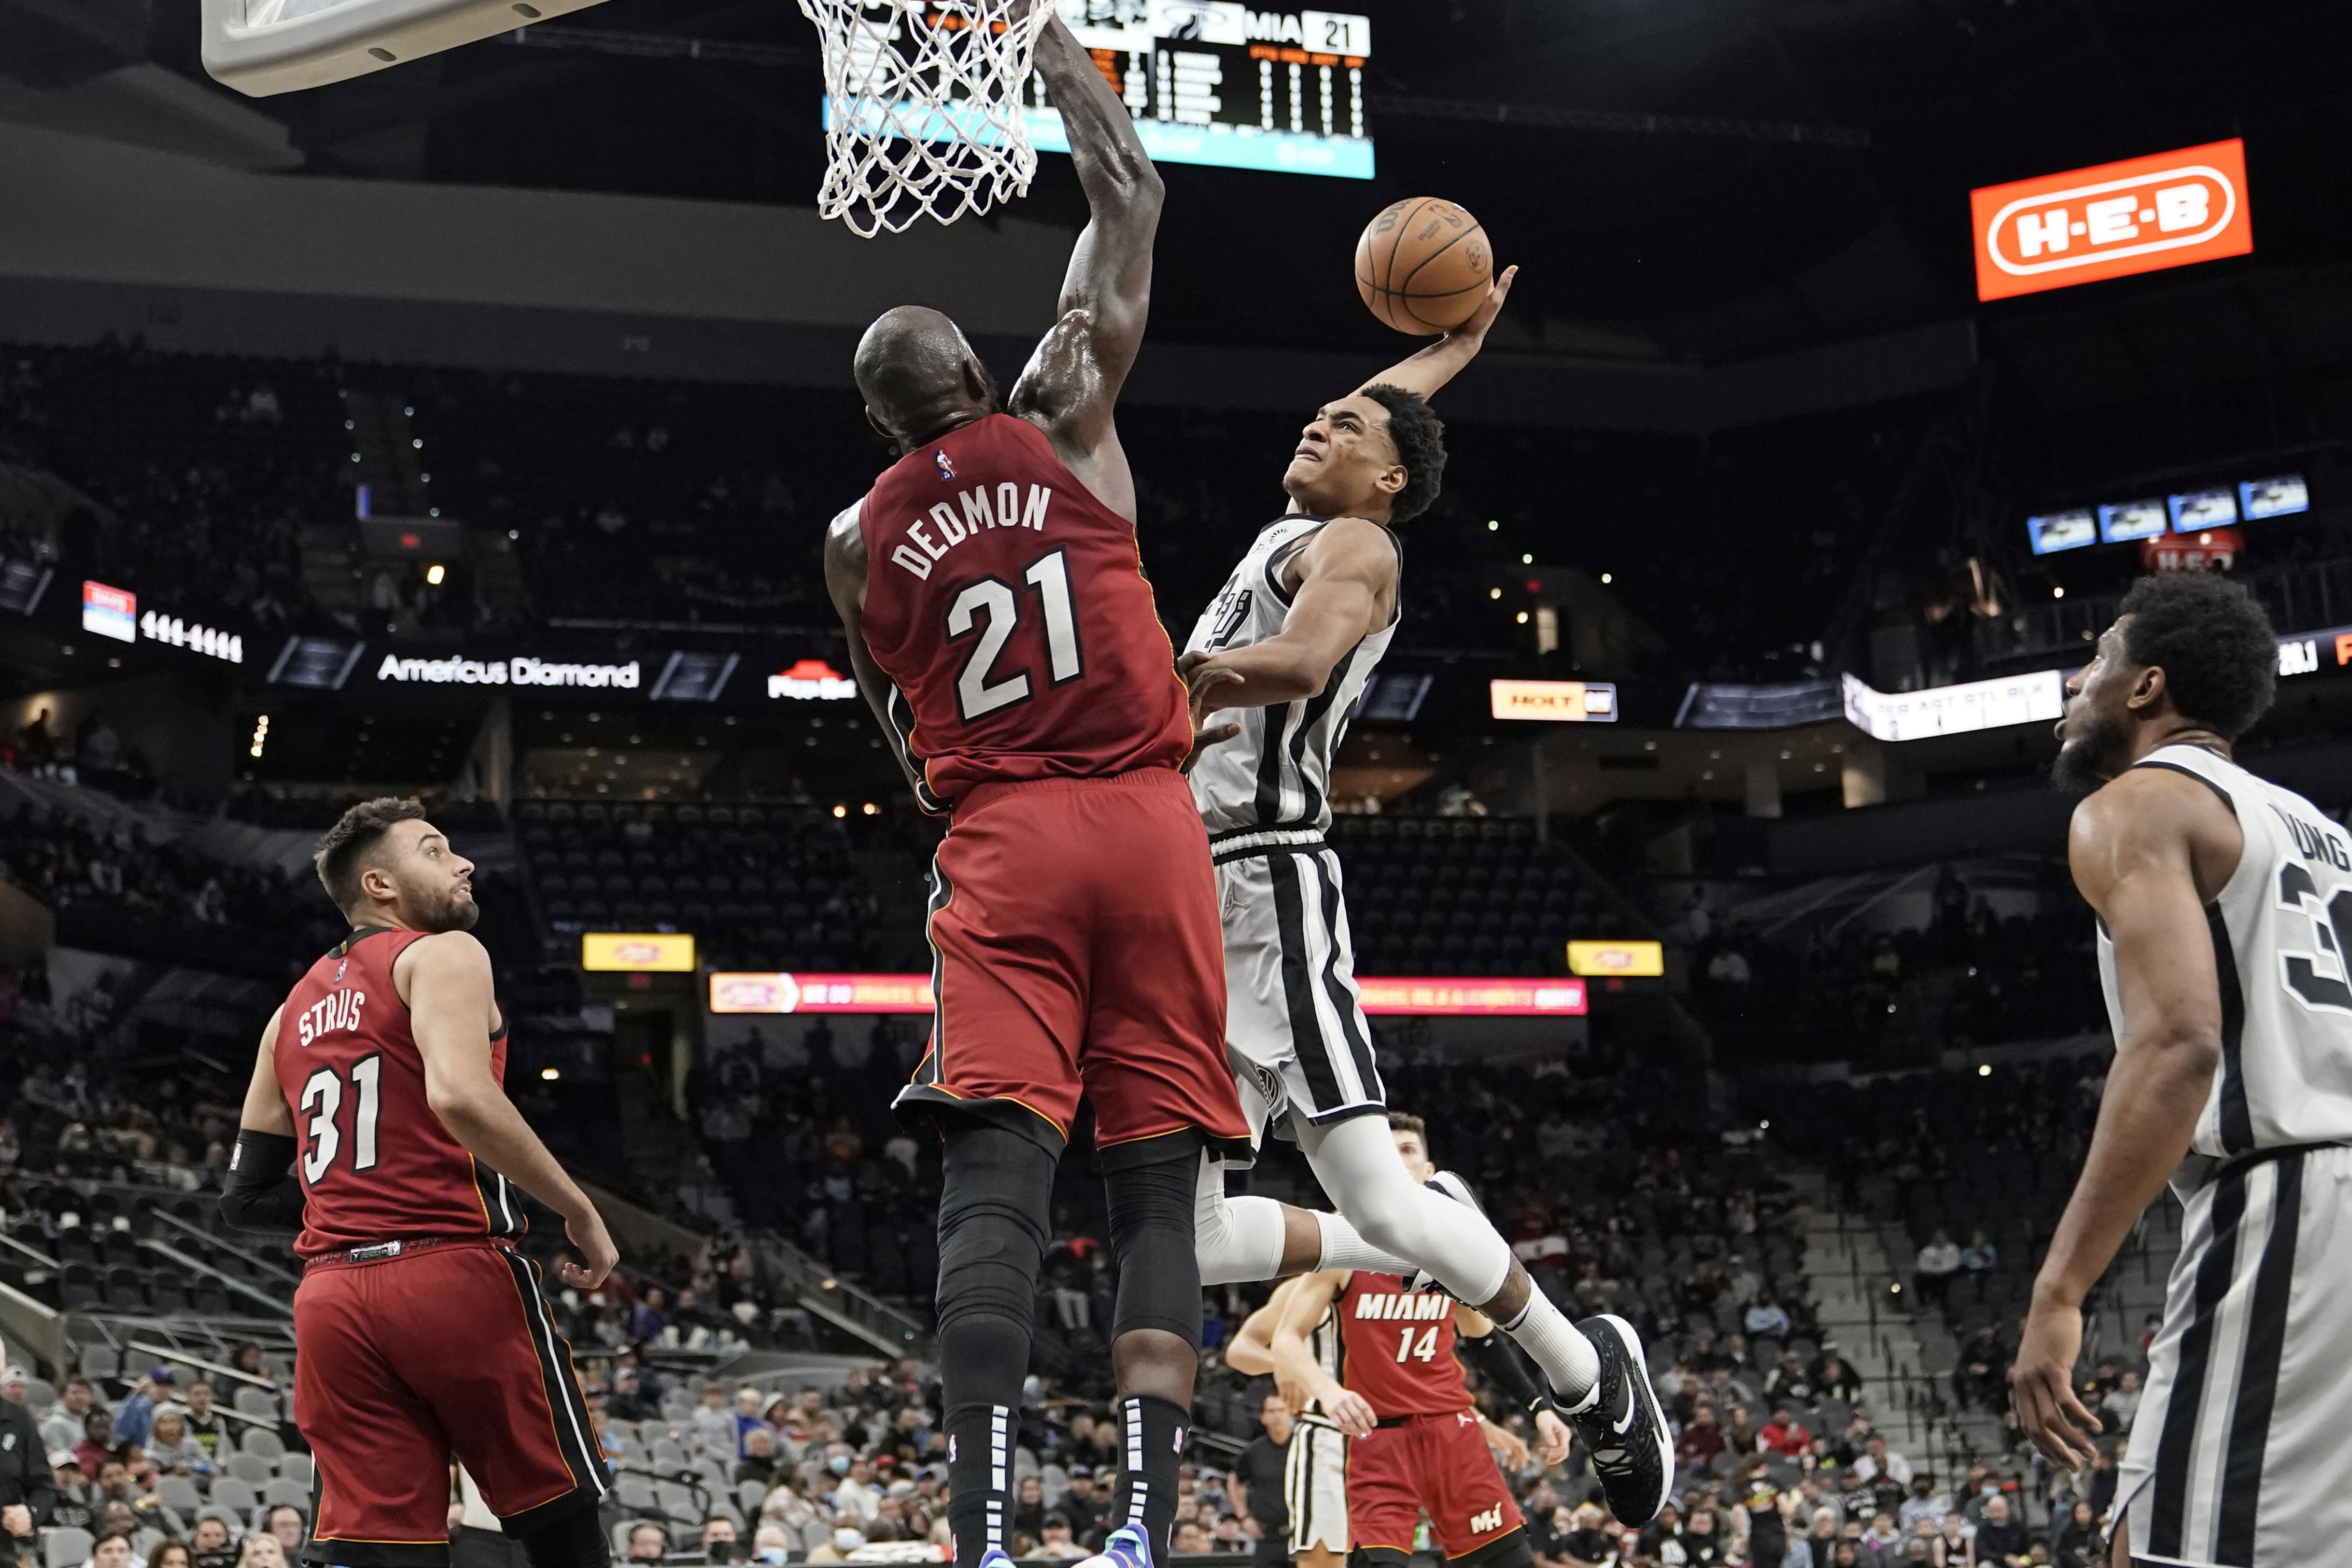 Informe: San Antonio Spurs vs Miami Heat en la Ciudad de México la próxima temporada